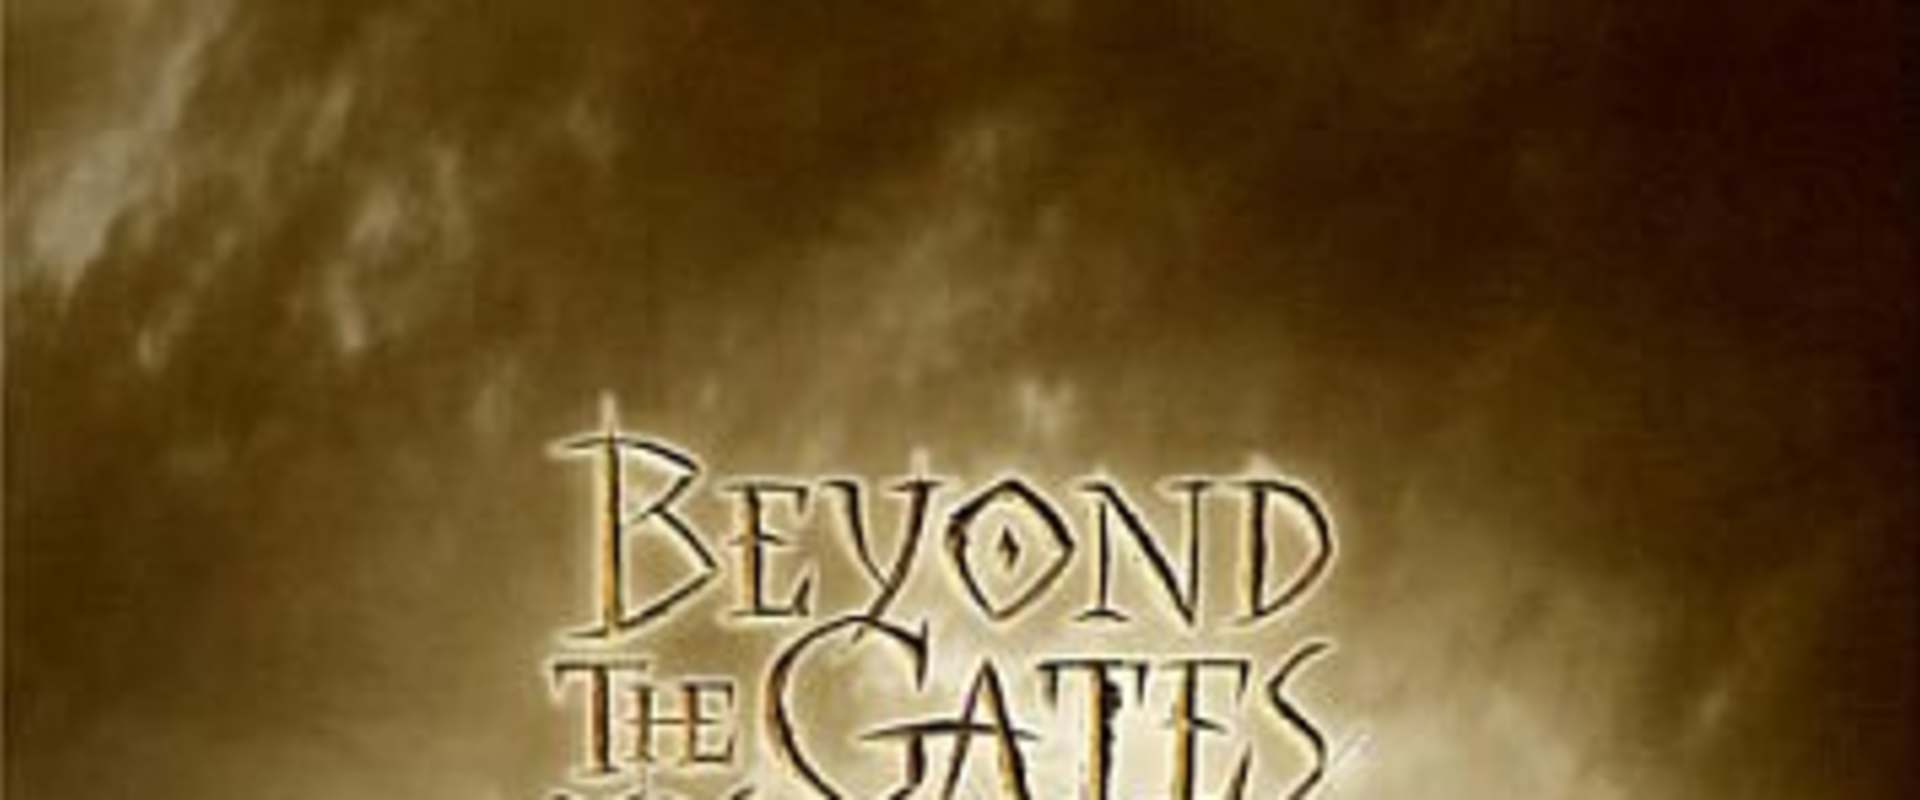 Beyond the Gates of Splendor background 1